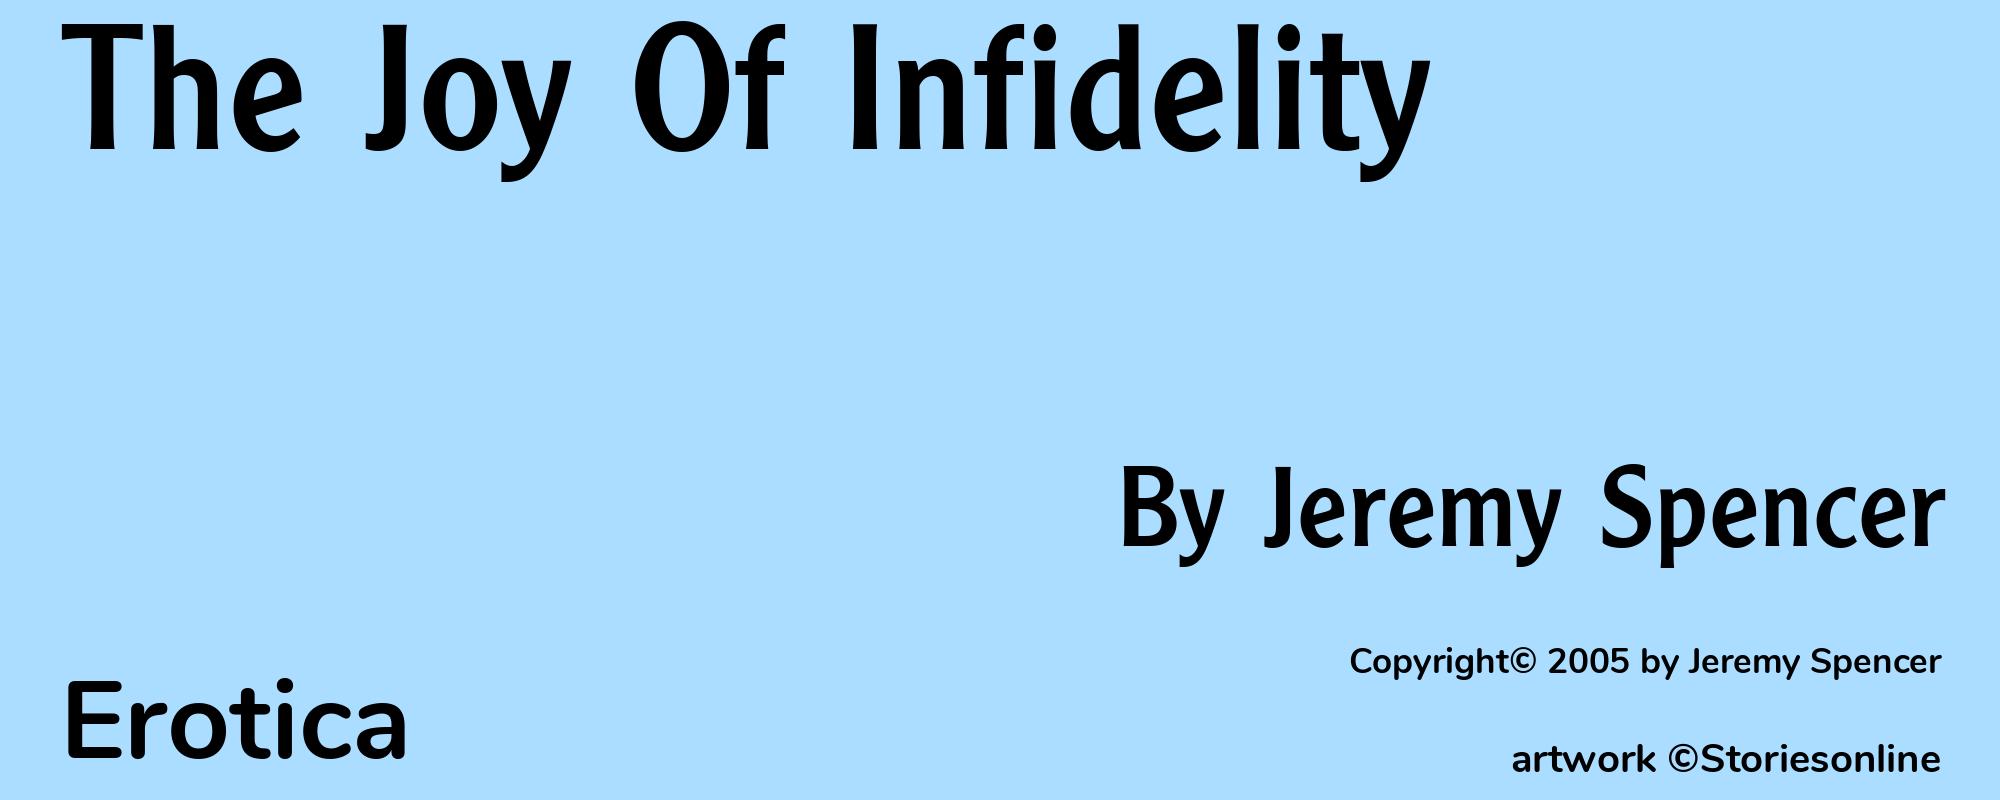 The Joy Of Infidelity - Cover